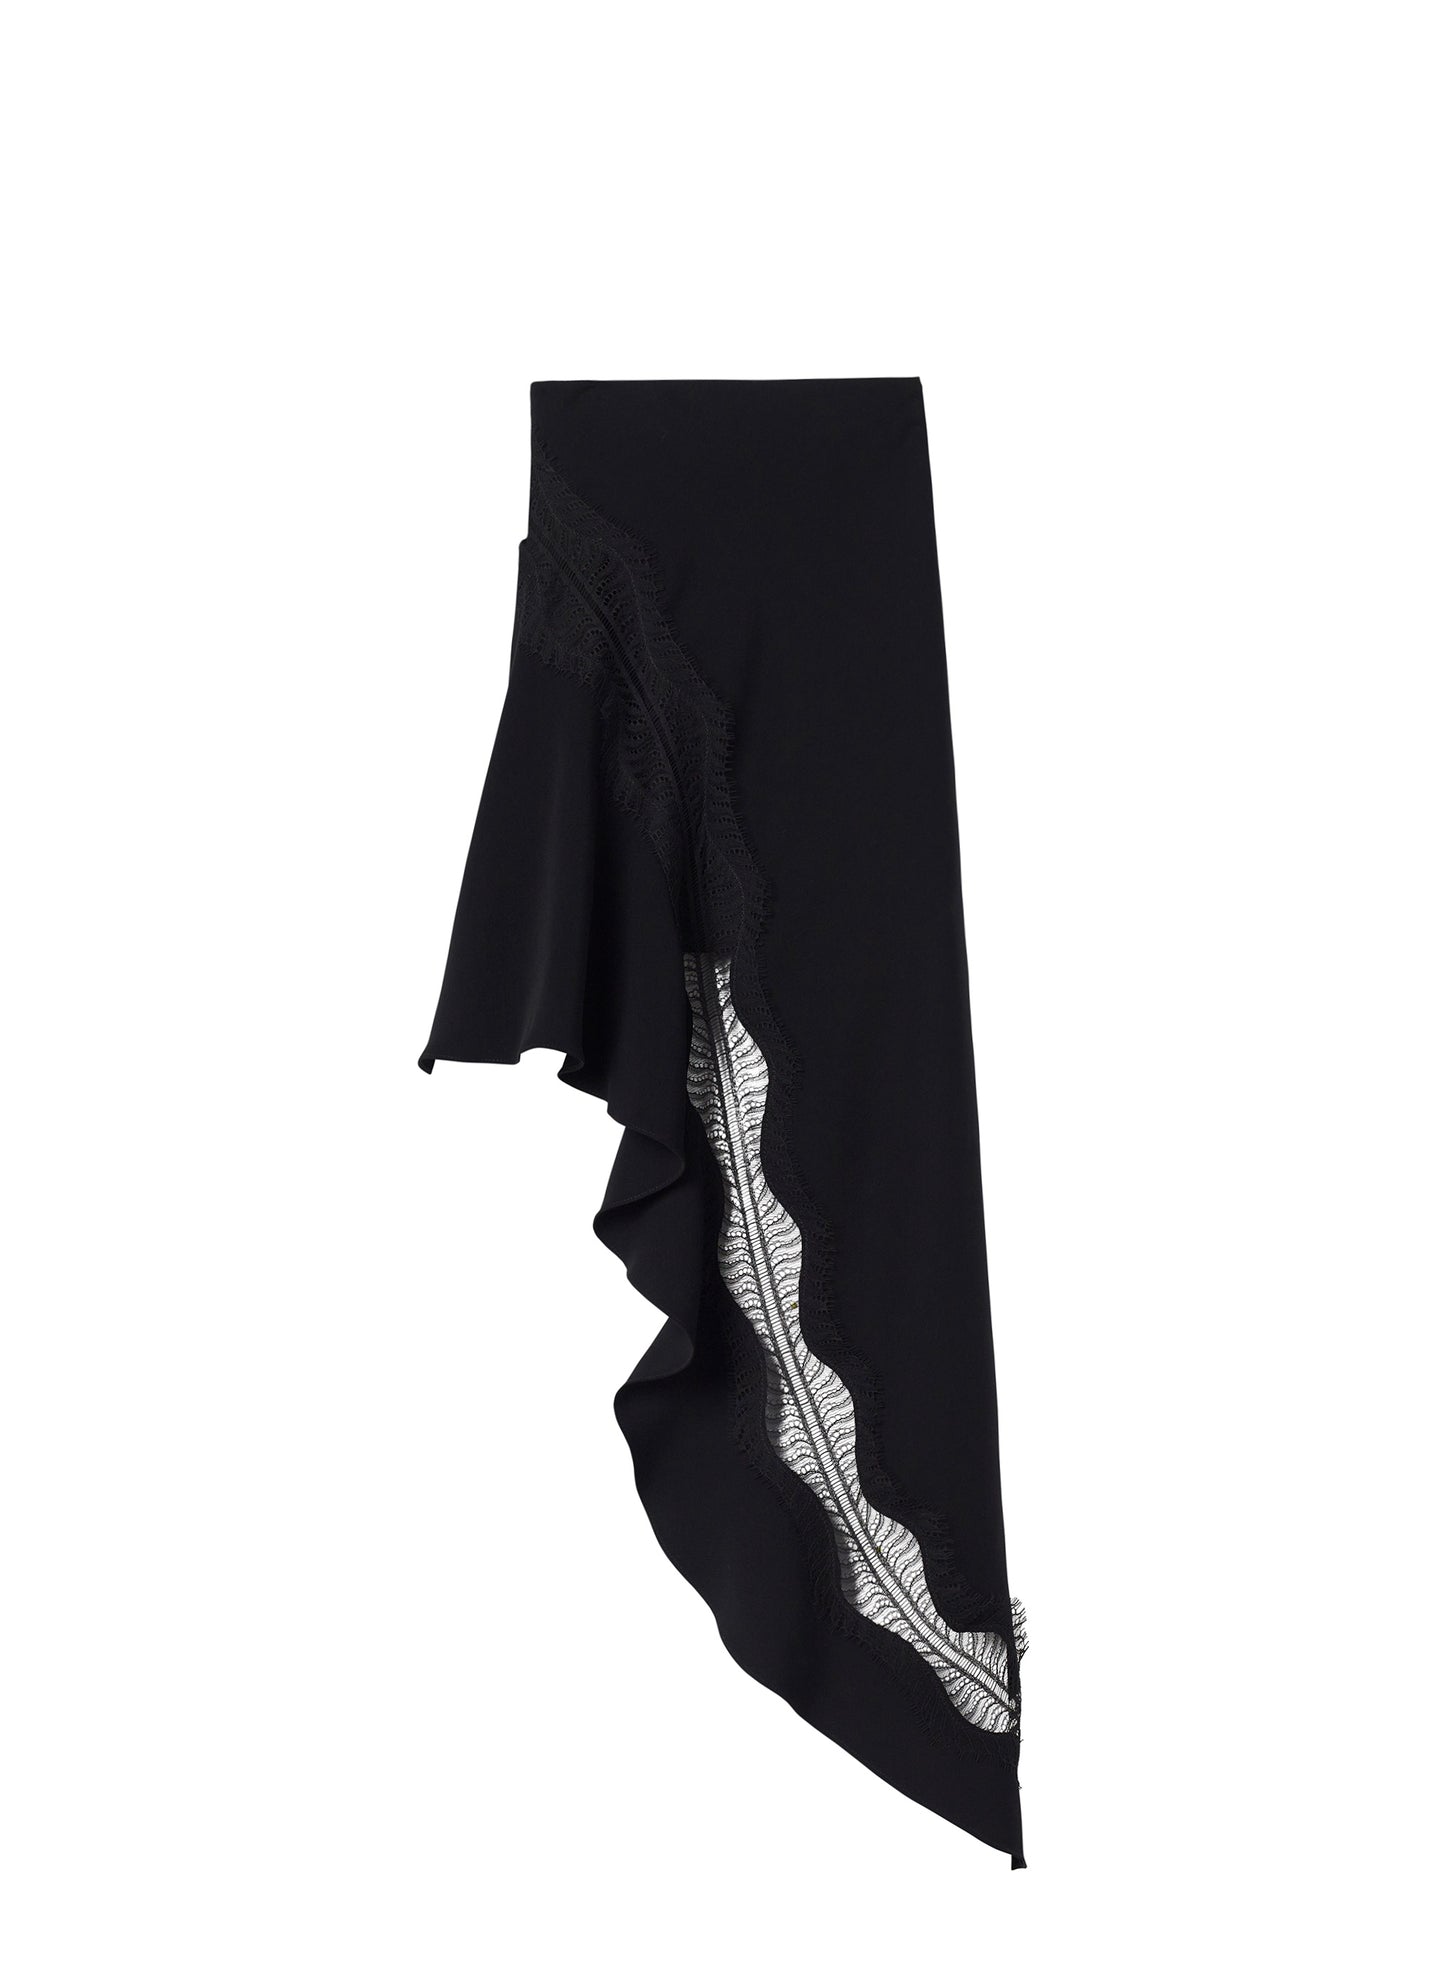 flatlay of asymmetric black satin and lace skirt